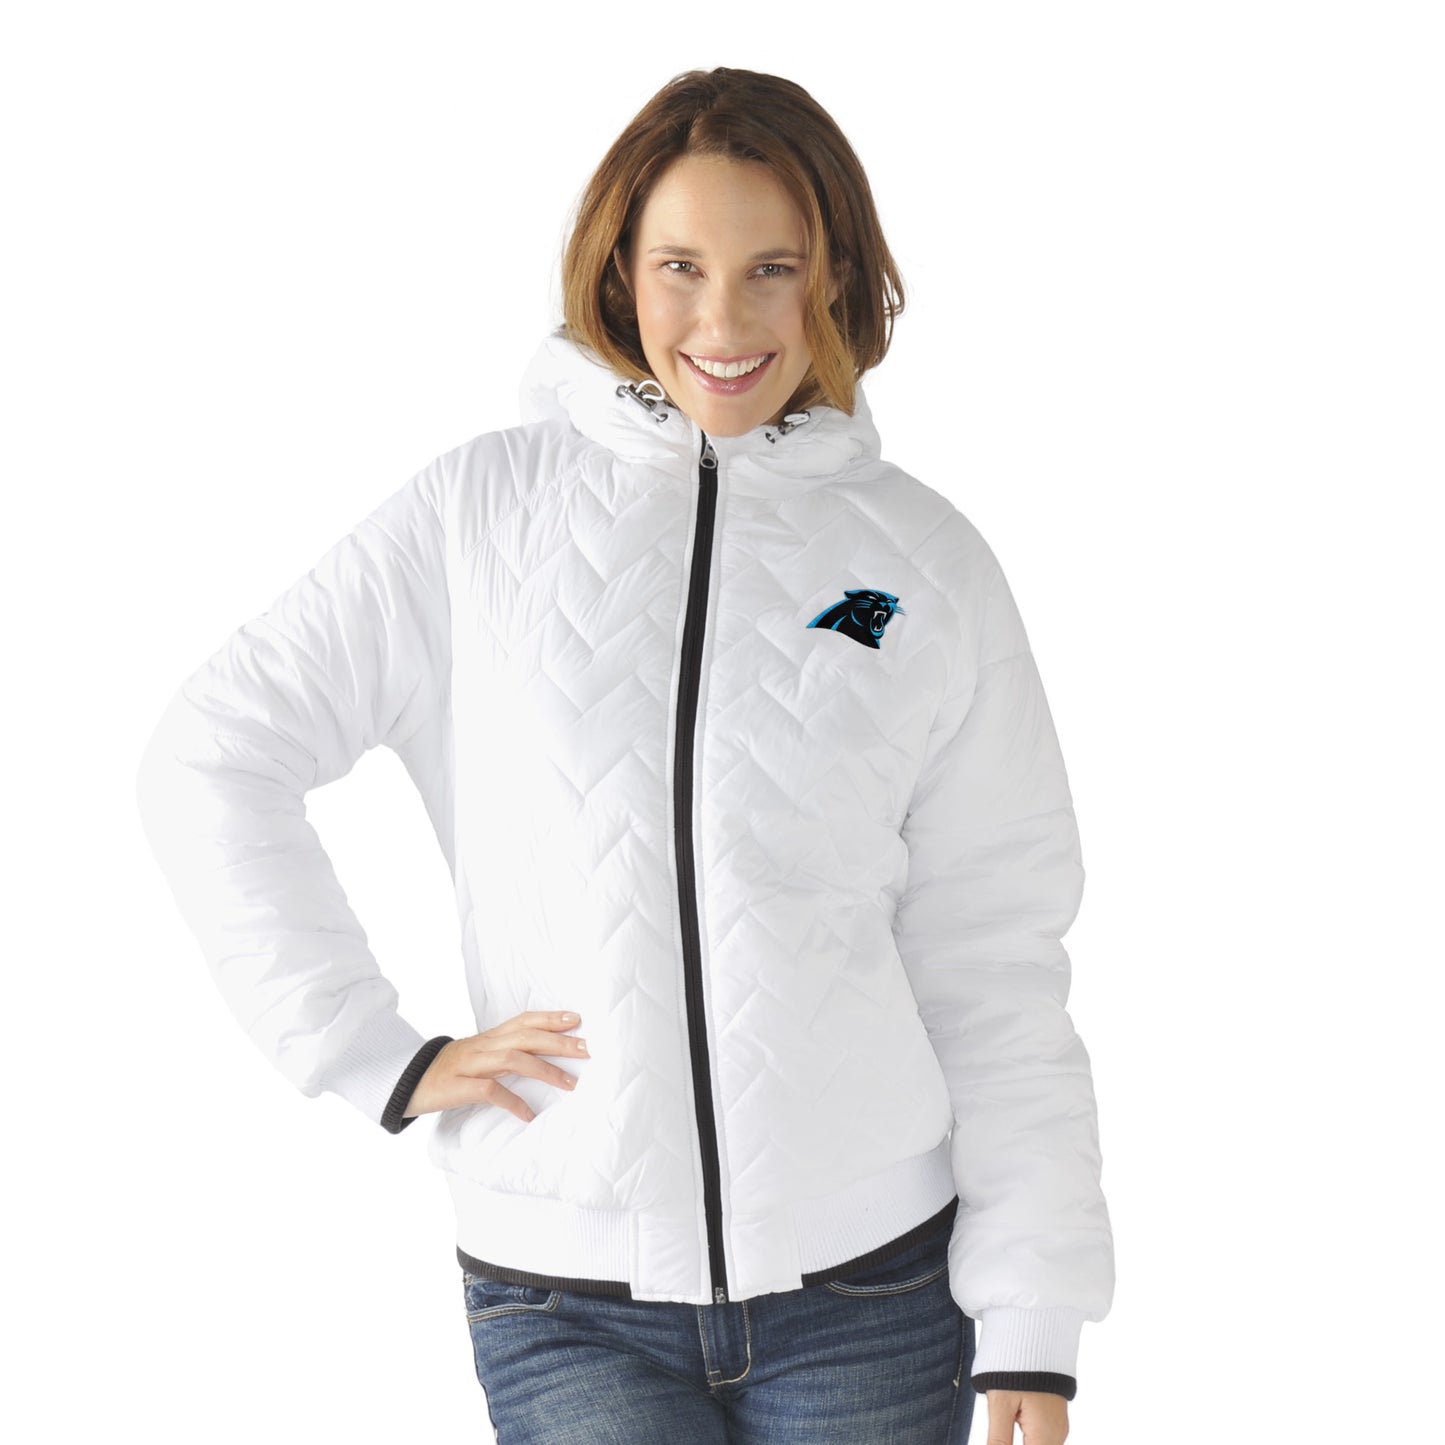 Carolina Panthers Womens Drop Back Jacket Outerwear - White